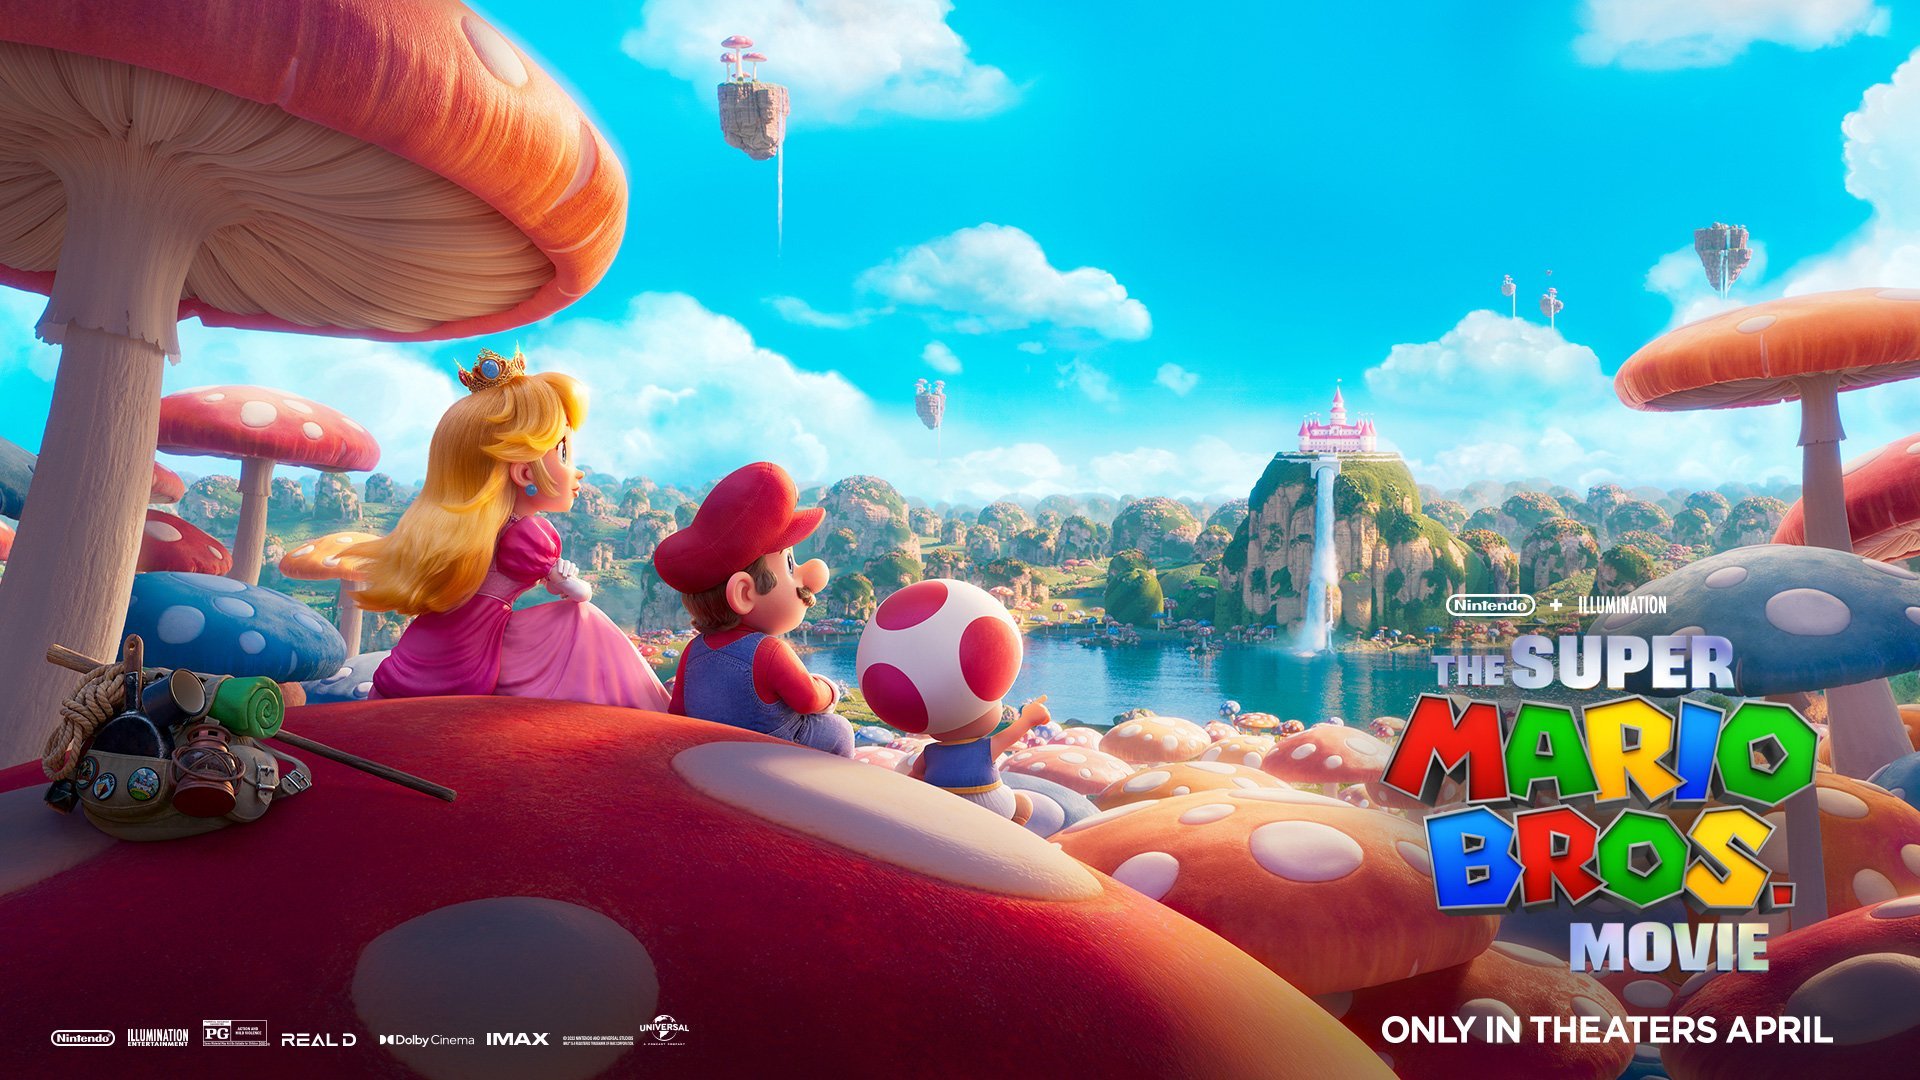 FileThe Super Mario Bros. Movie Mushroom Kingdom poster.jpg Super